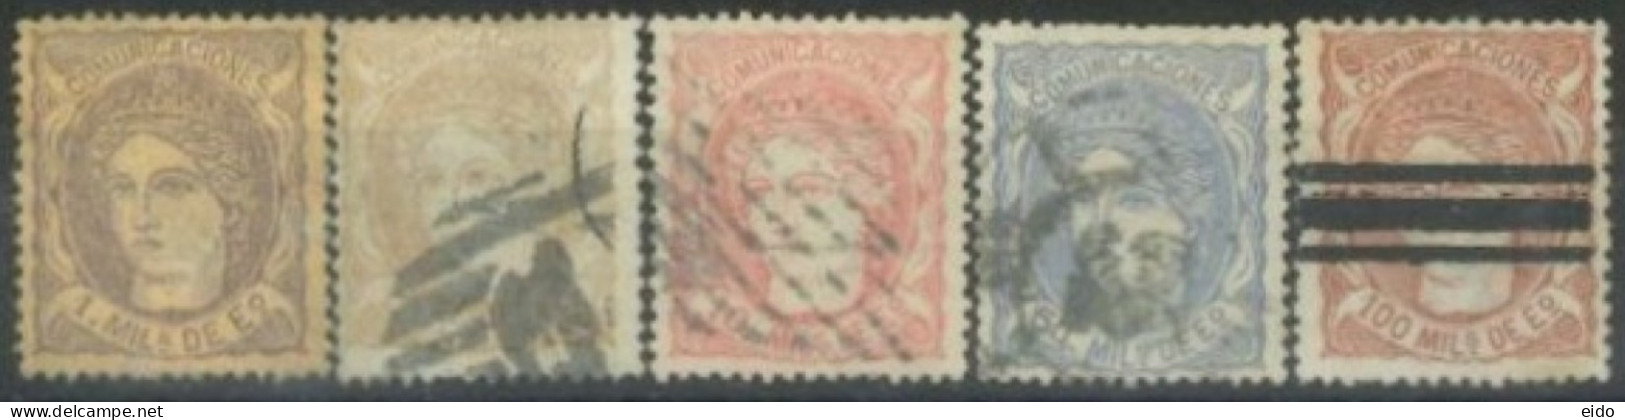 SPAIN,  1870 - ESPANA STAMPS SET OF 5, # 159, 163/64, & 166/67,USED. - Usados